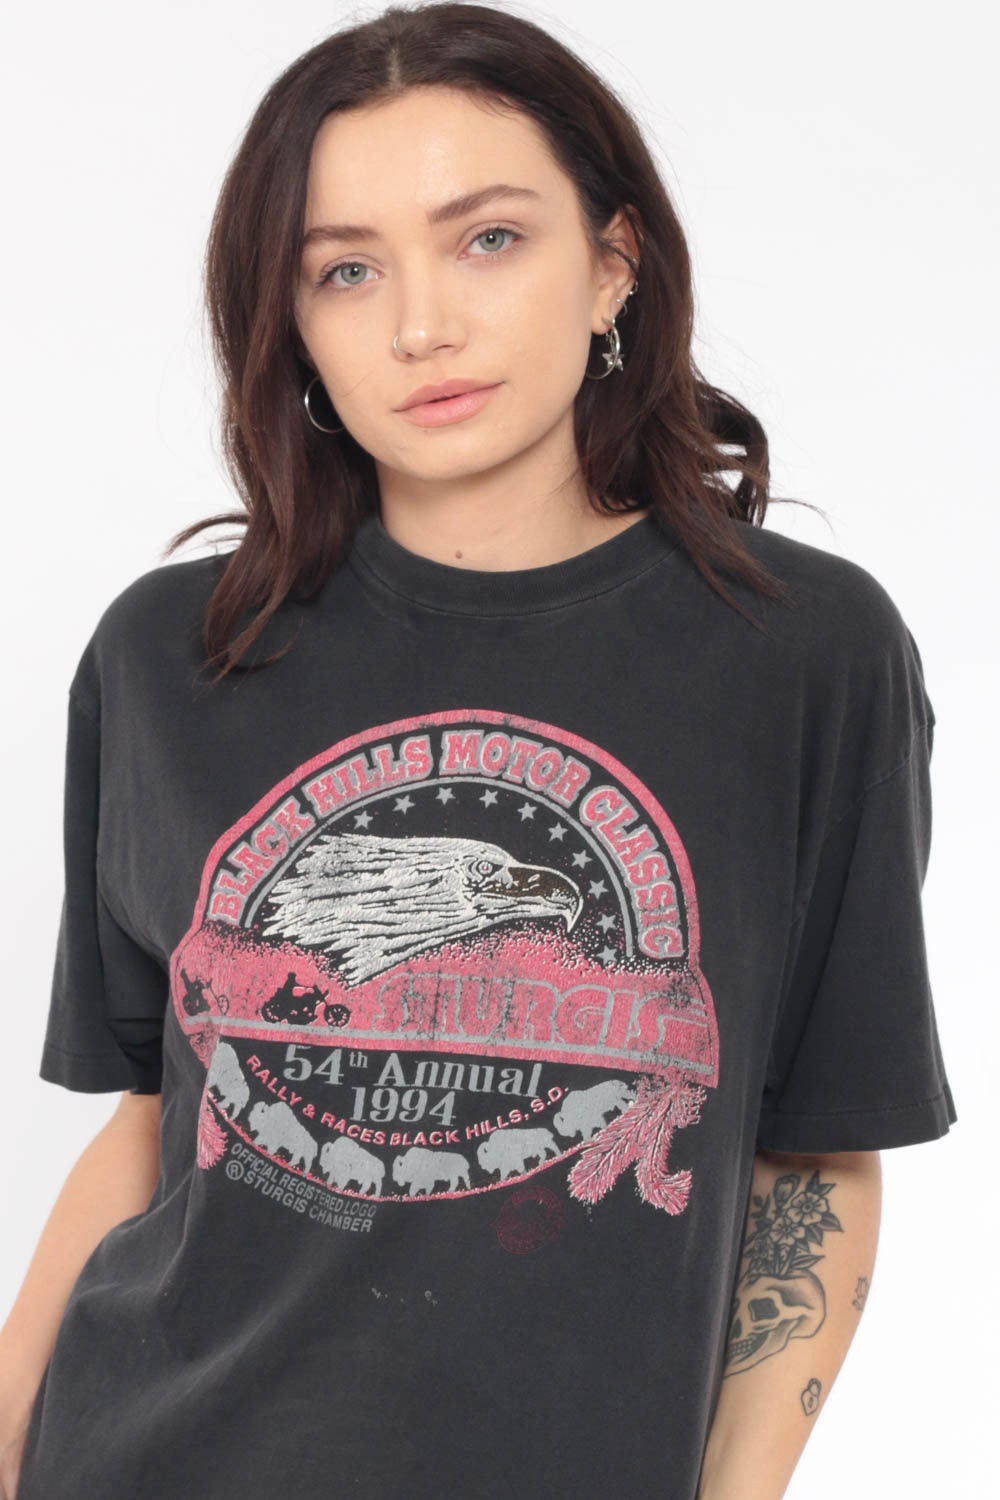 1994 Sturgis Shirt Biker T Shirt Motorcycle Shirt 90s Black Hills Motor ...